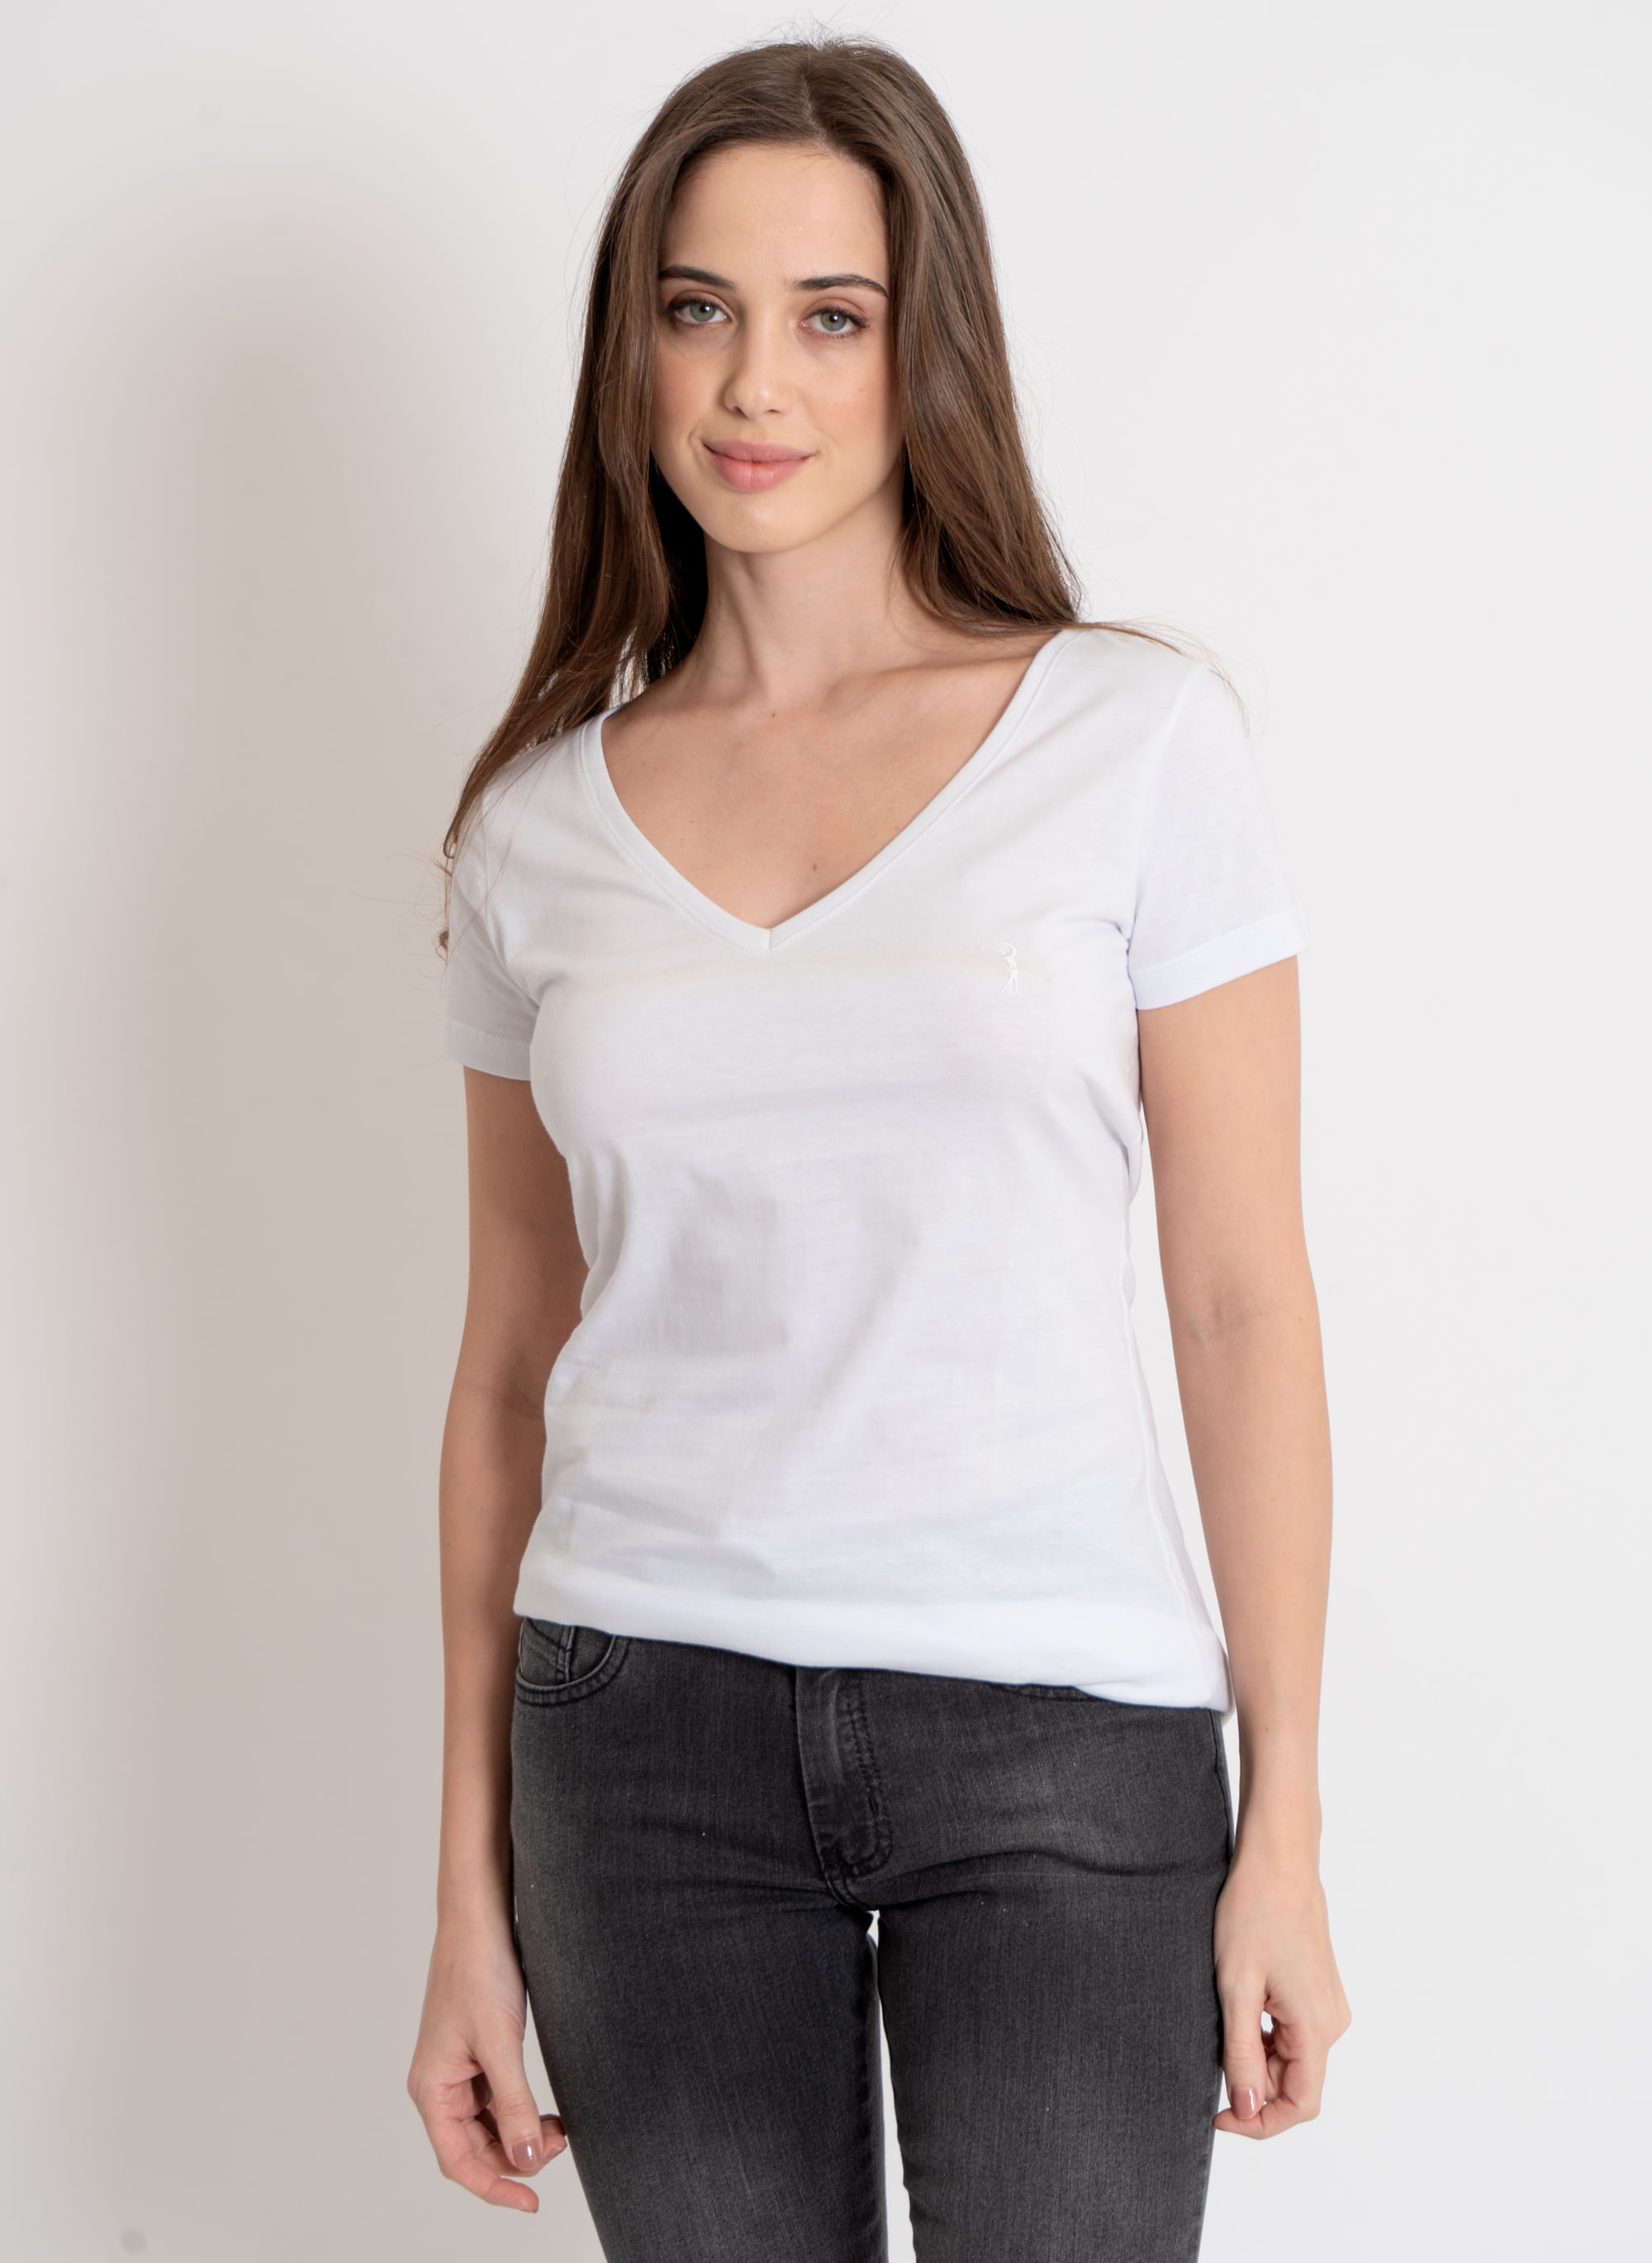 Camiseta-Aleatory-Feminina-Live-Branca-Branco-G